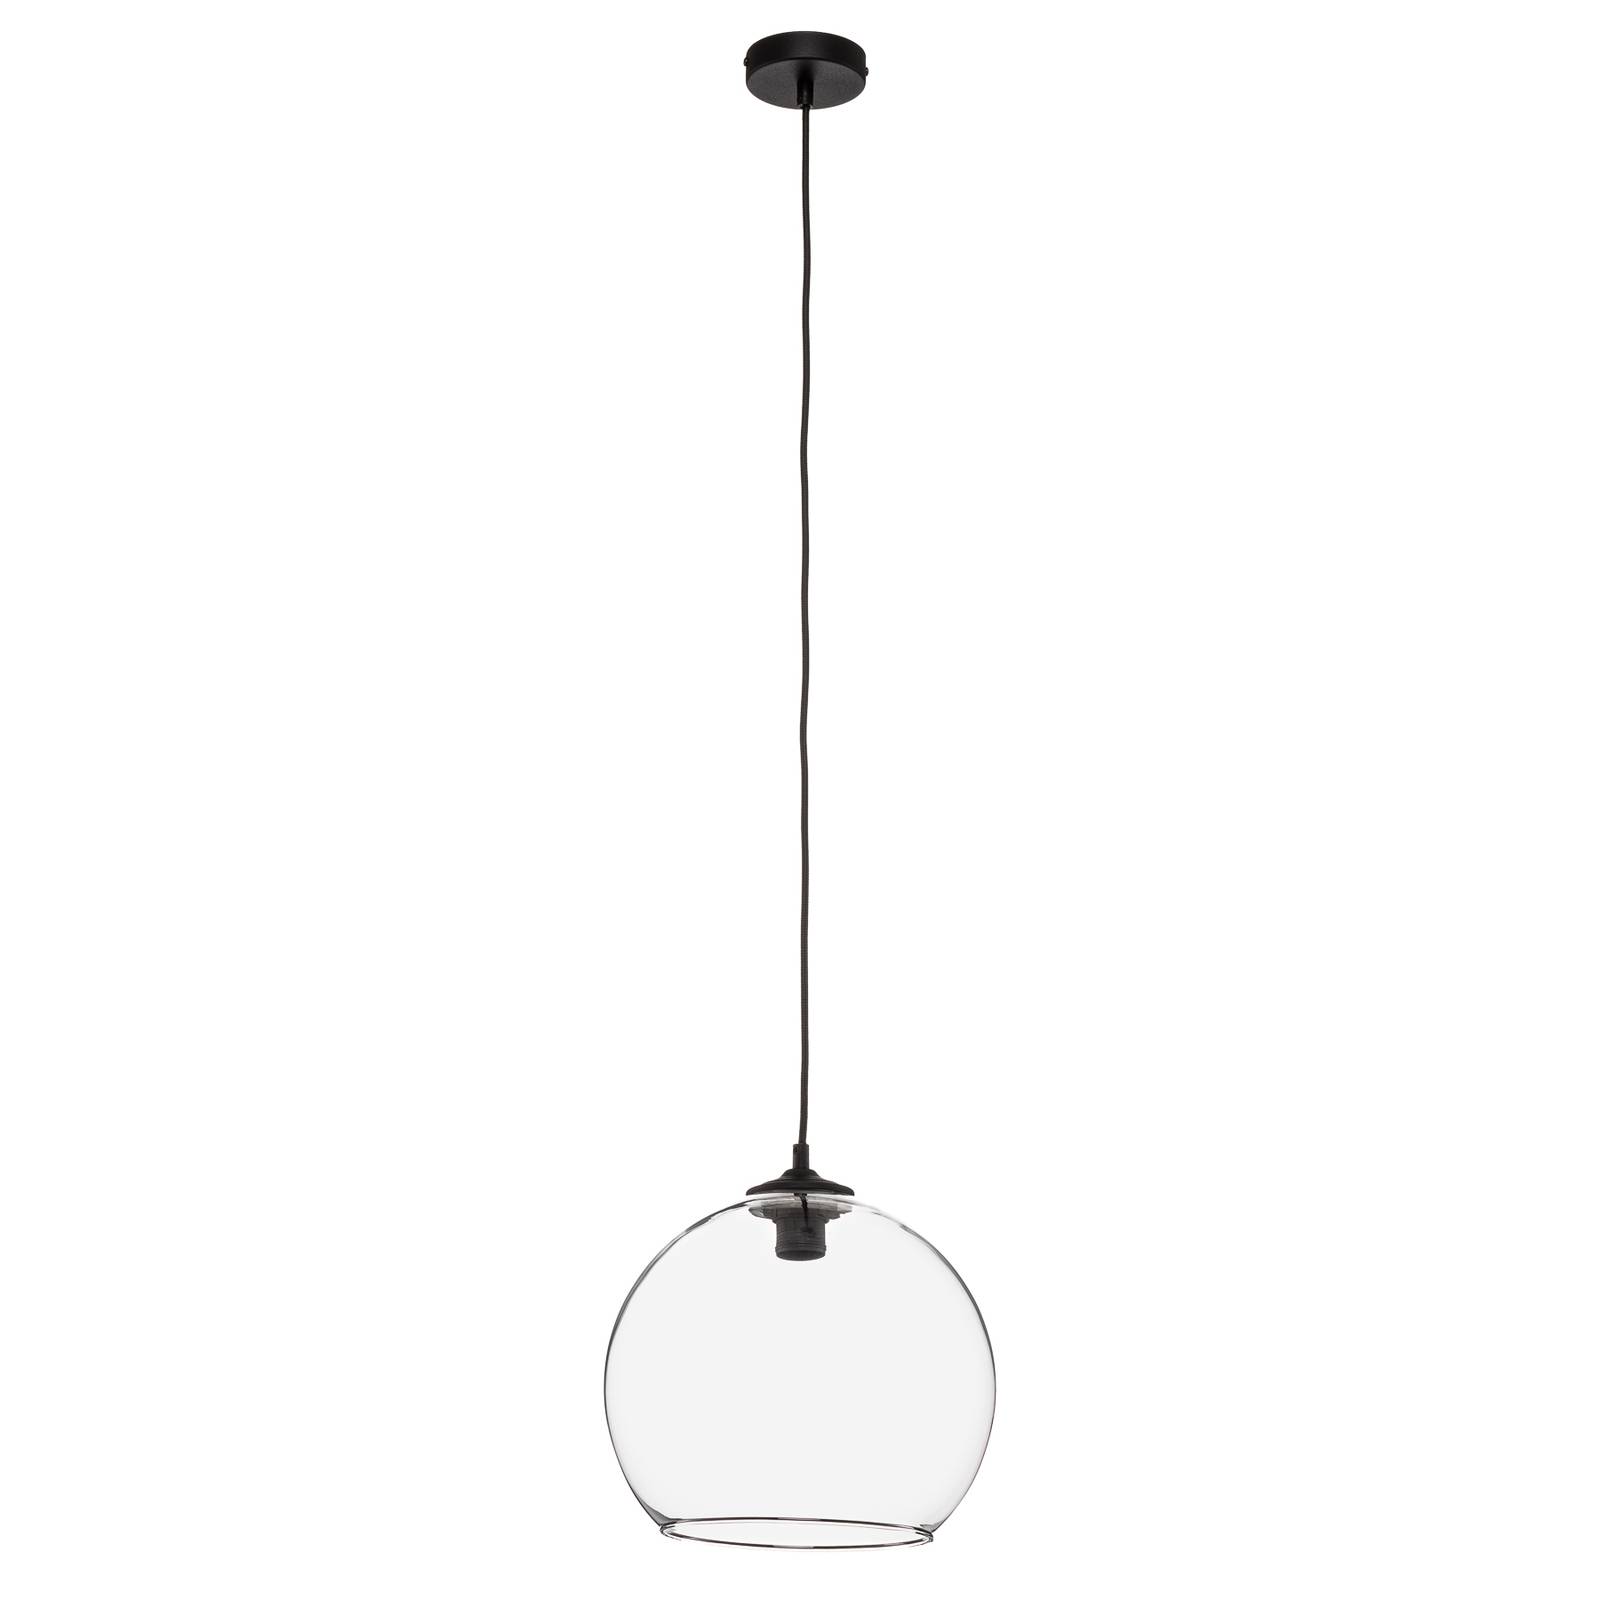 Solbika Lighting Hängelampe Ball Glas-Kugelschirm klar Ø 30cm